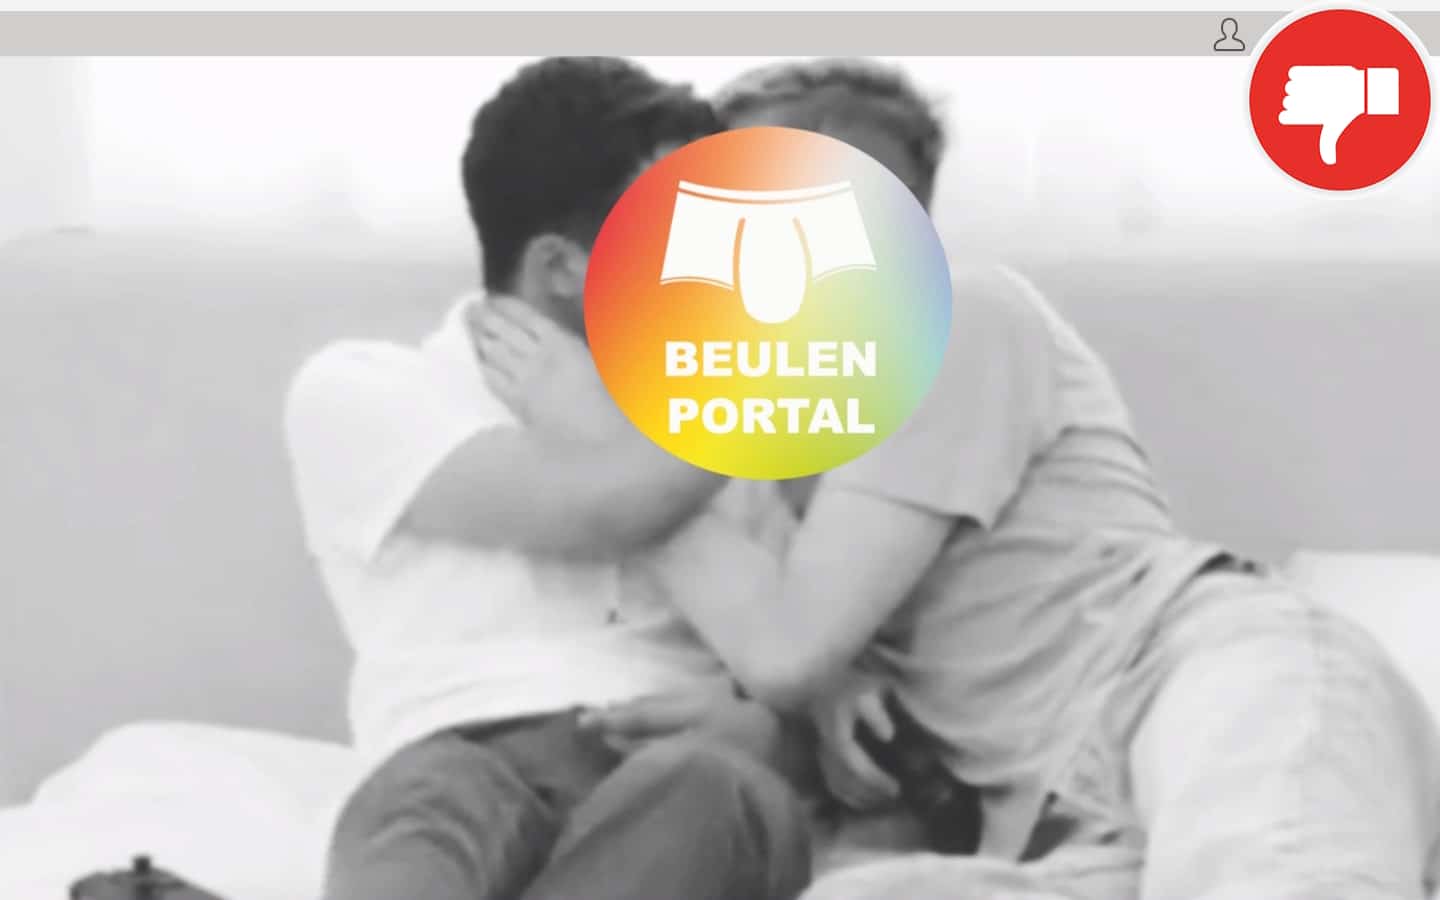 Testbericht BeulenPortal.com Abzocke